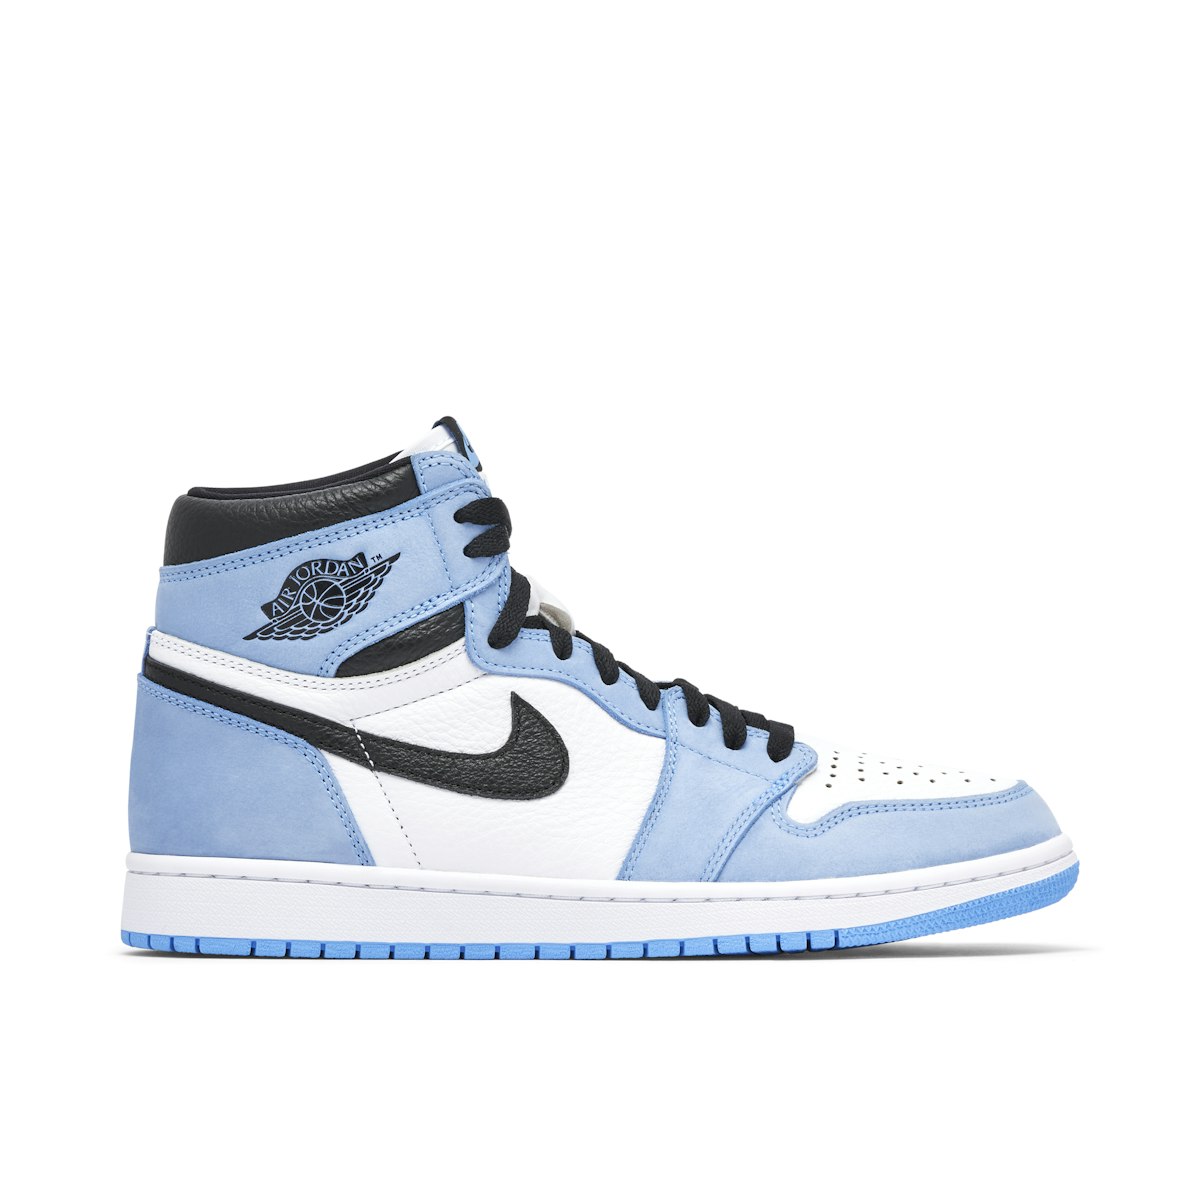 Custom Nike Air Jordan 1 Mid Baby Blue AJ1 Unisex sneakers for Men & Women